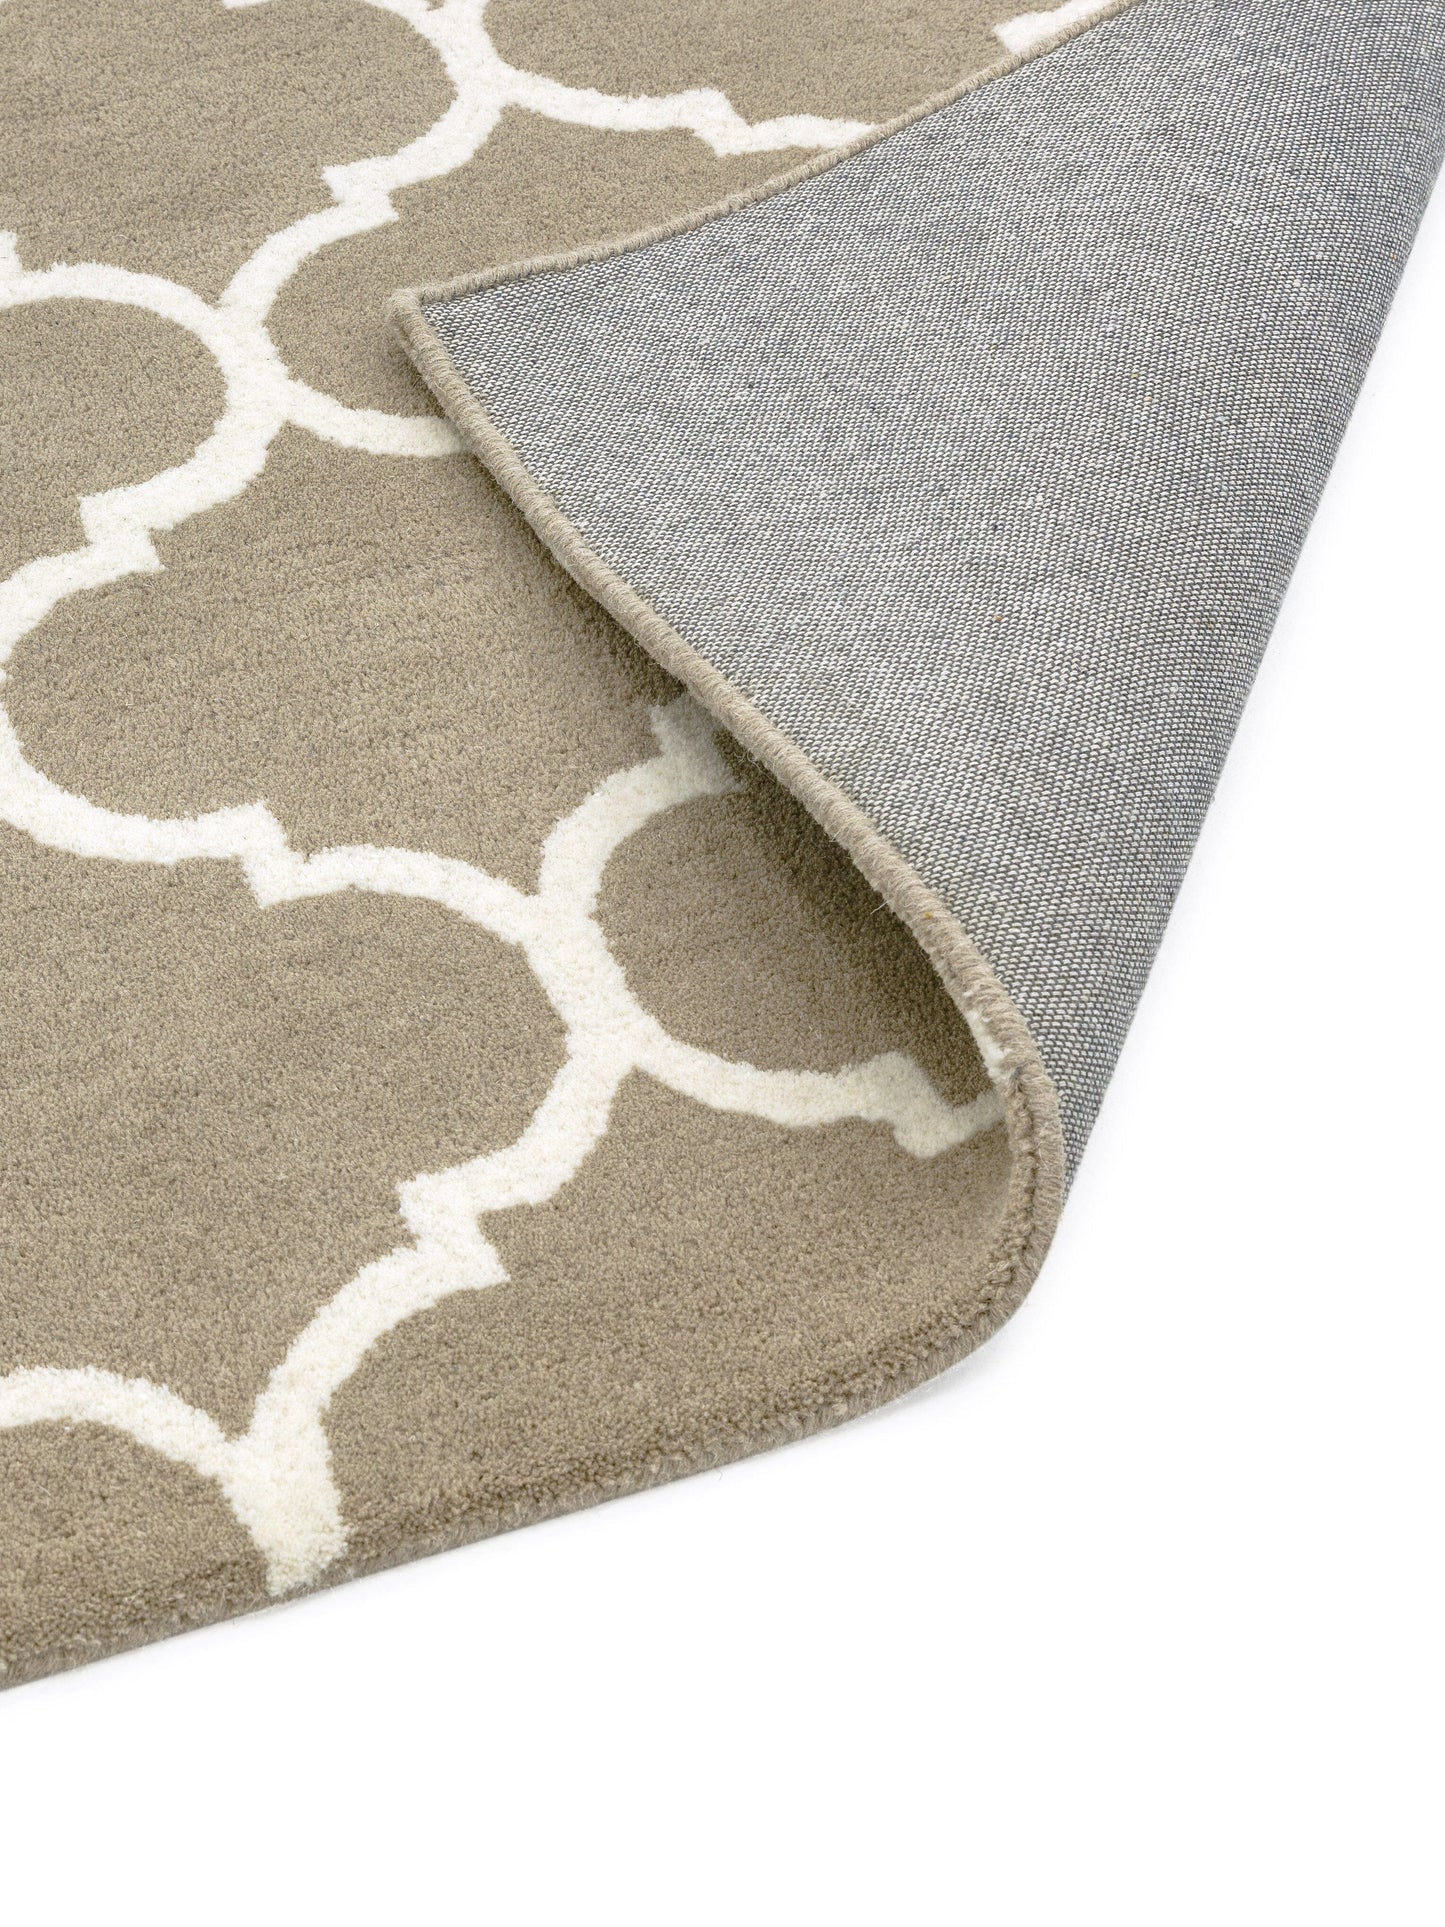 Asiatic Carpets Albany Handtufted Rug Ogee Camel - 160 x 230cm